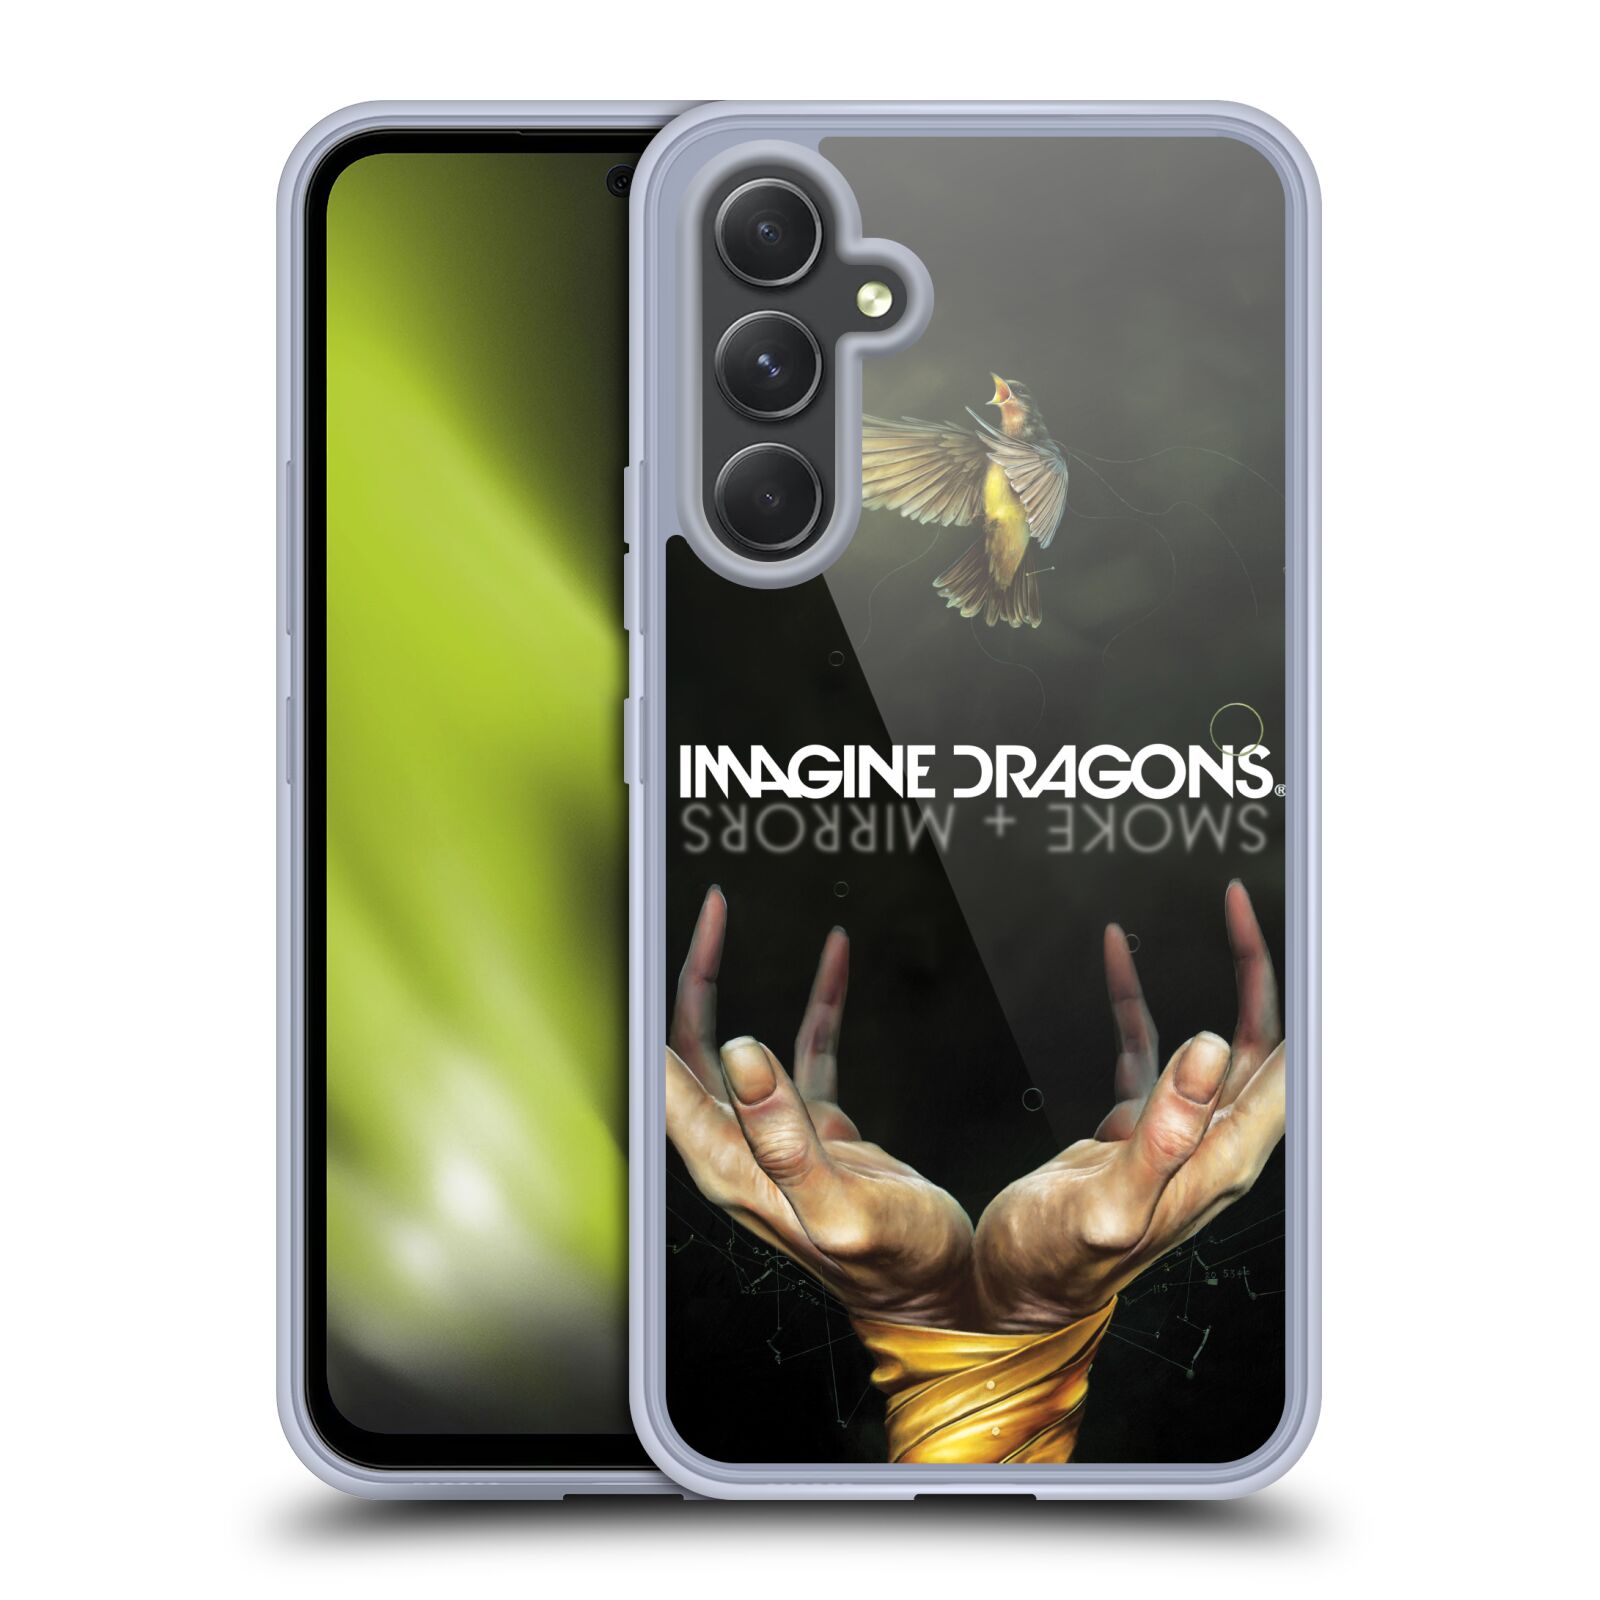 Silikonové pouzdro na mobil Samsung Galaxy A54 5G - Imagine Dragons - Smoke And Mirrors (Silikonový kryt, obal, pouzdro na mobilní telefon Samsung Galaxy A54 5G s licencovaným motivem Imagine Dragons - Smoke And Mirrors)